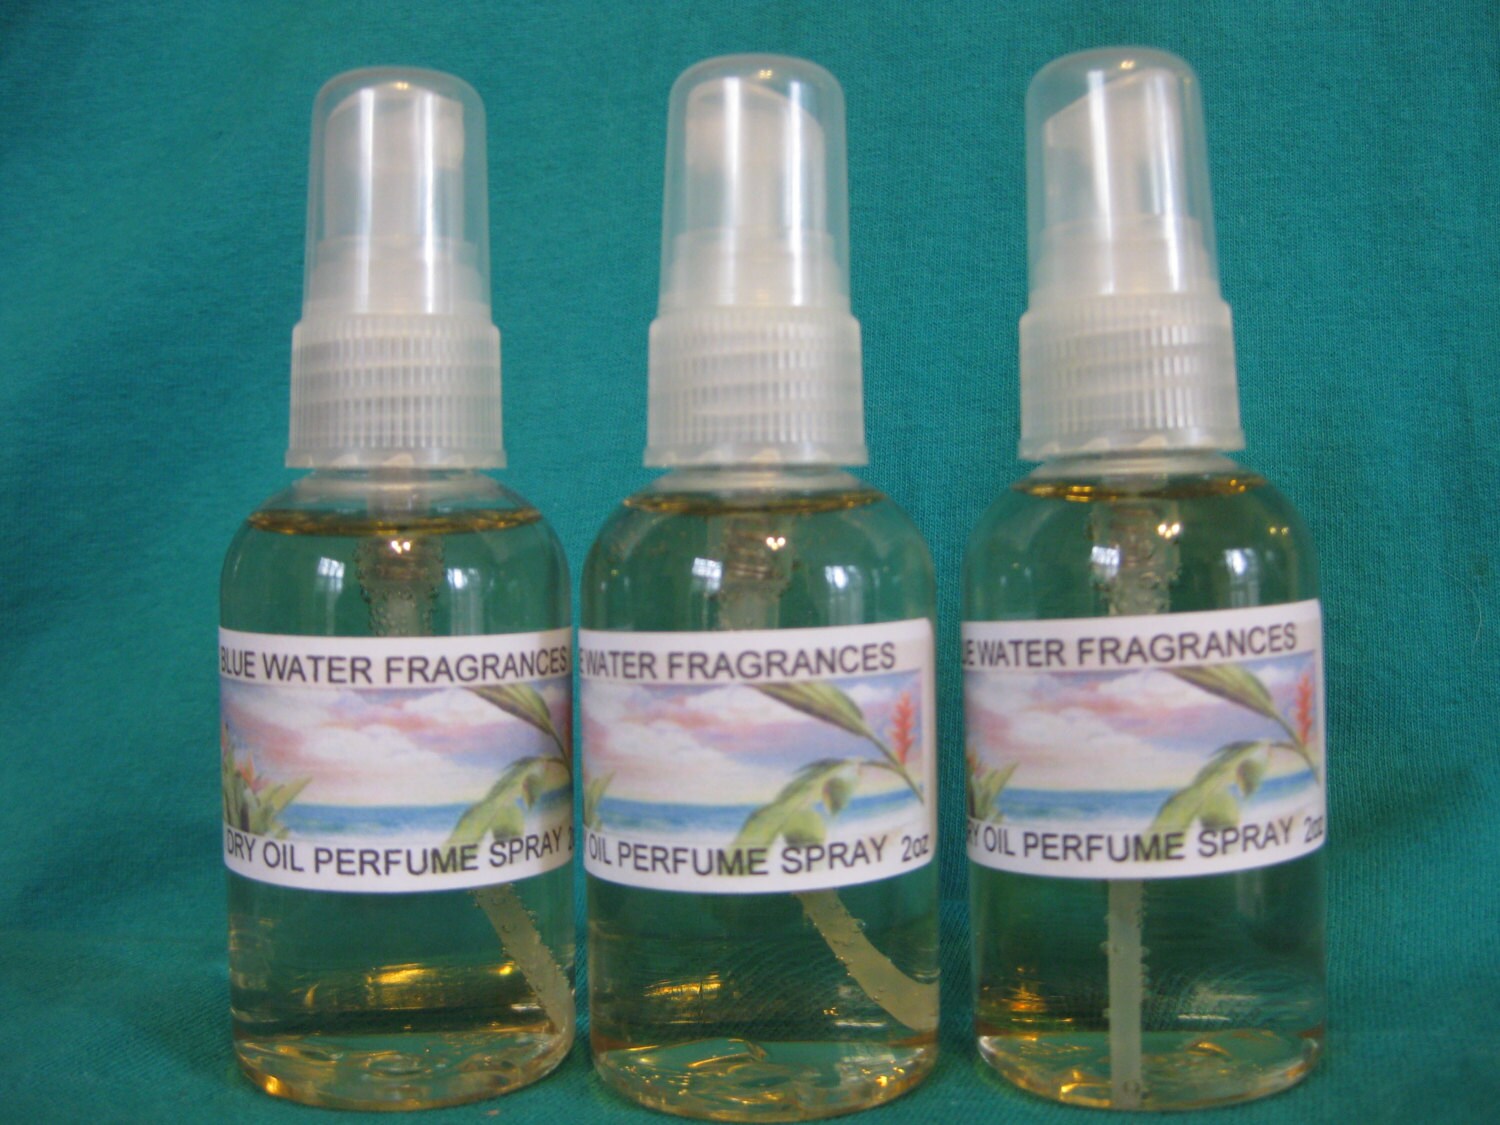 BLACK ICE Type Men Fragrance Oil Body Cologne Perfume 1/2oz 15ml